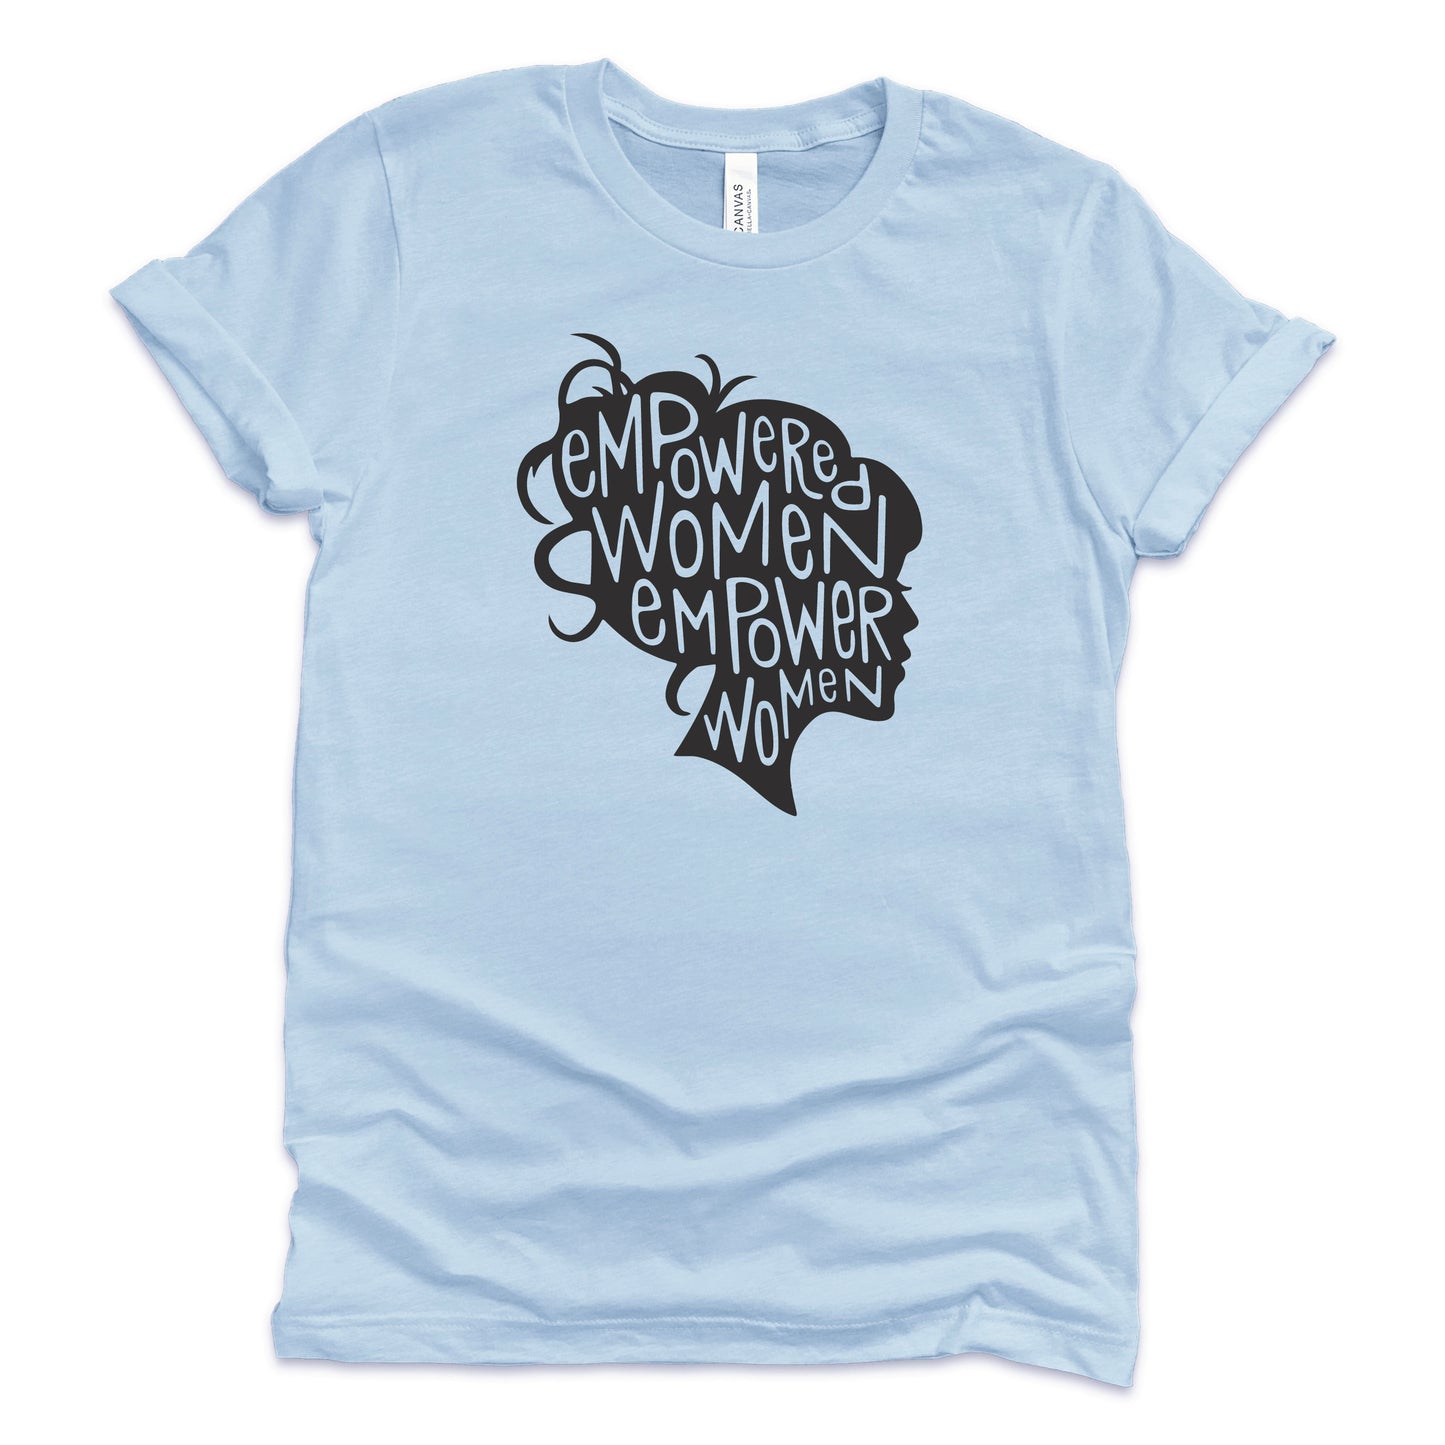 
                  
                    Empowered Women Empower Women Shirt
                  
                